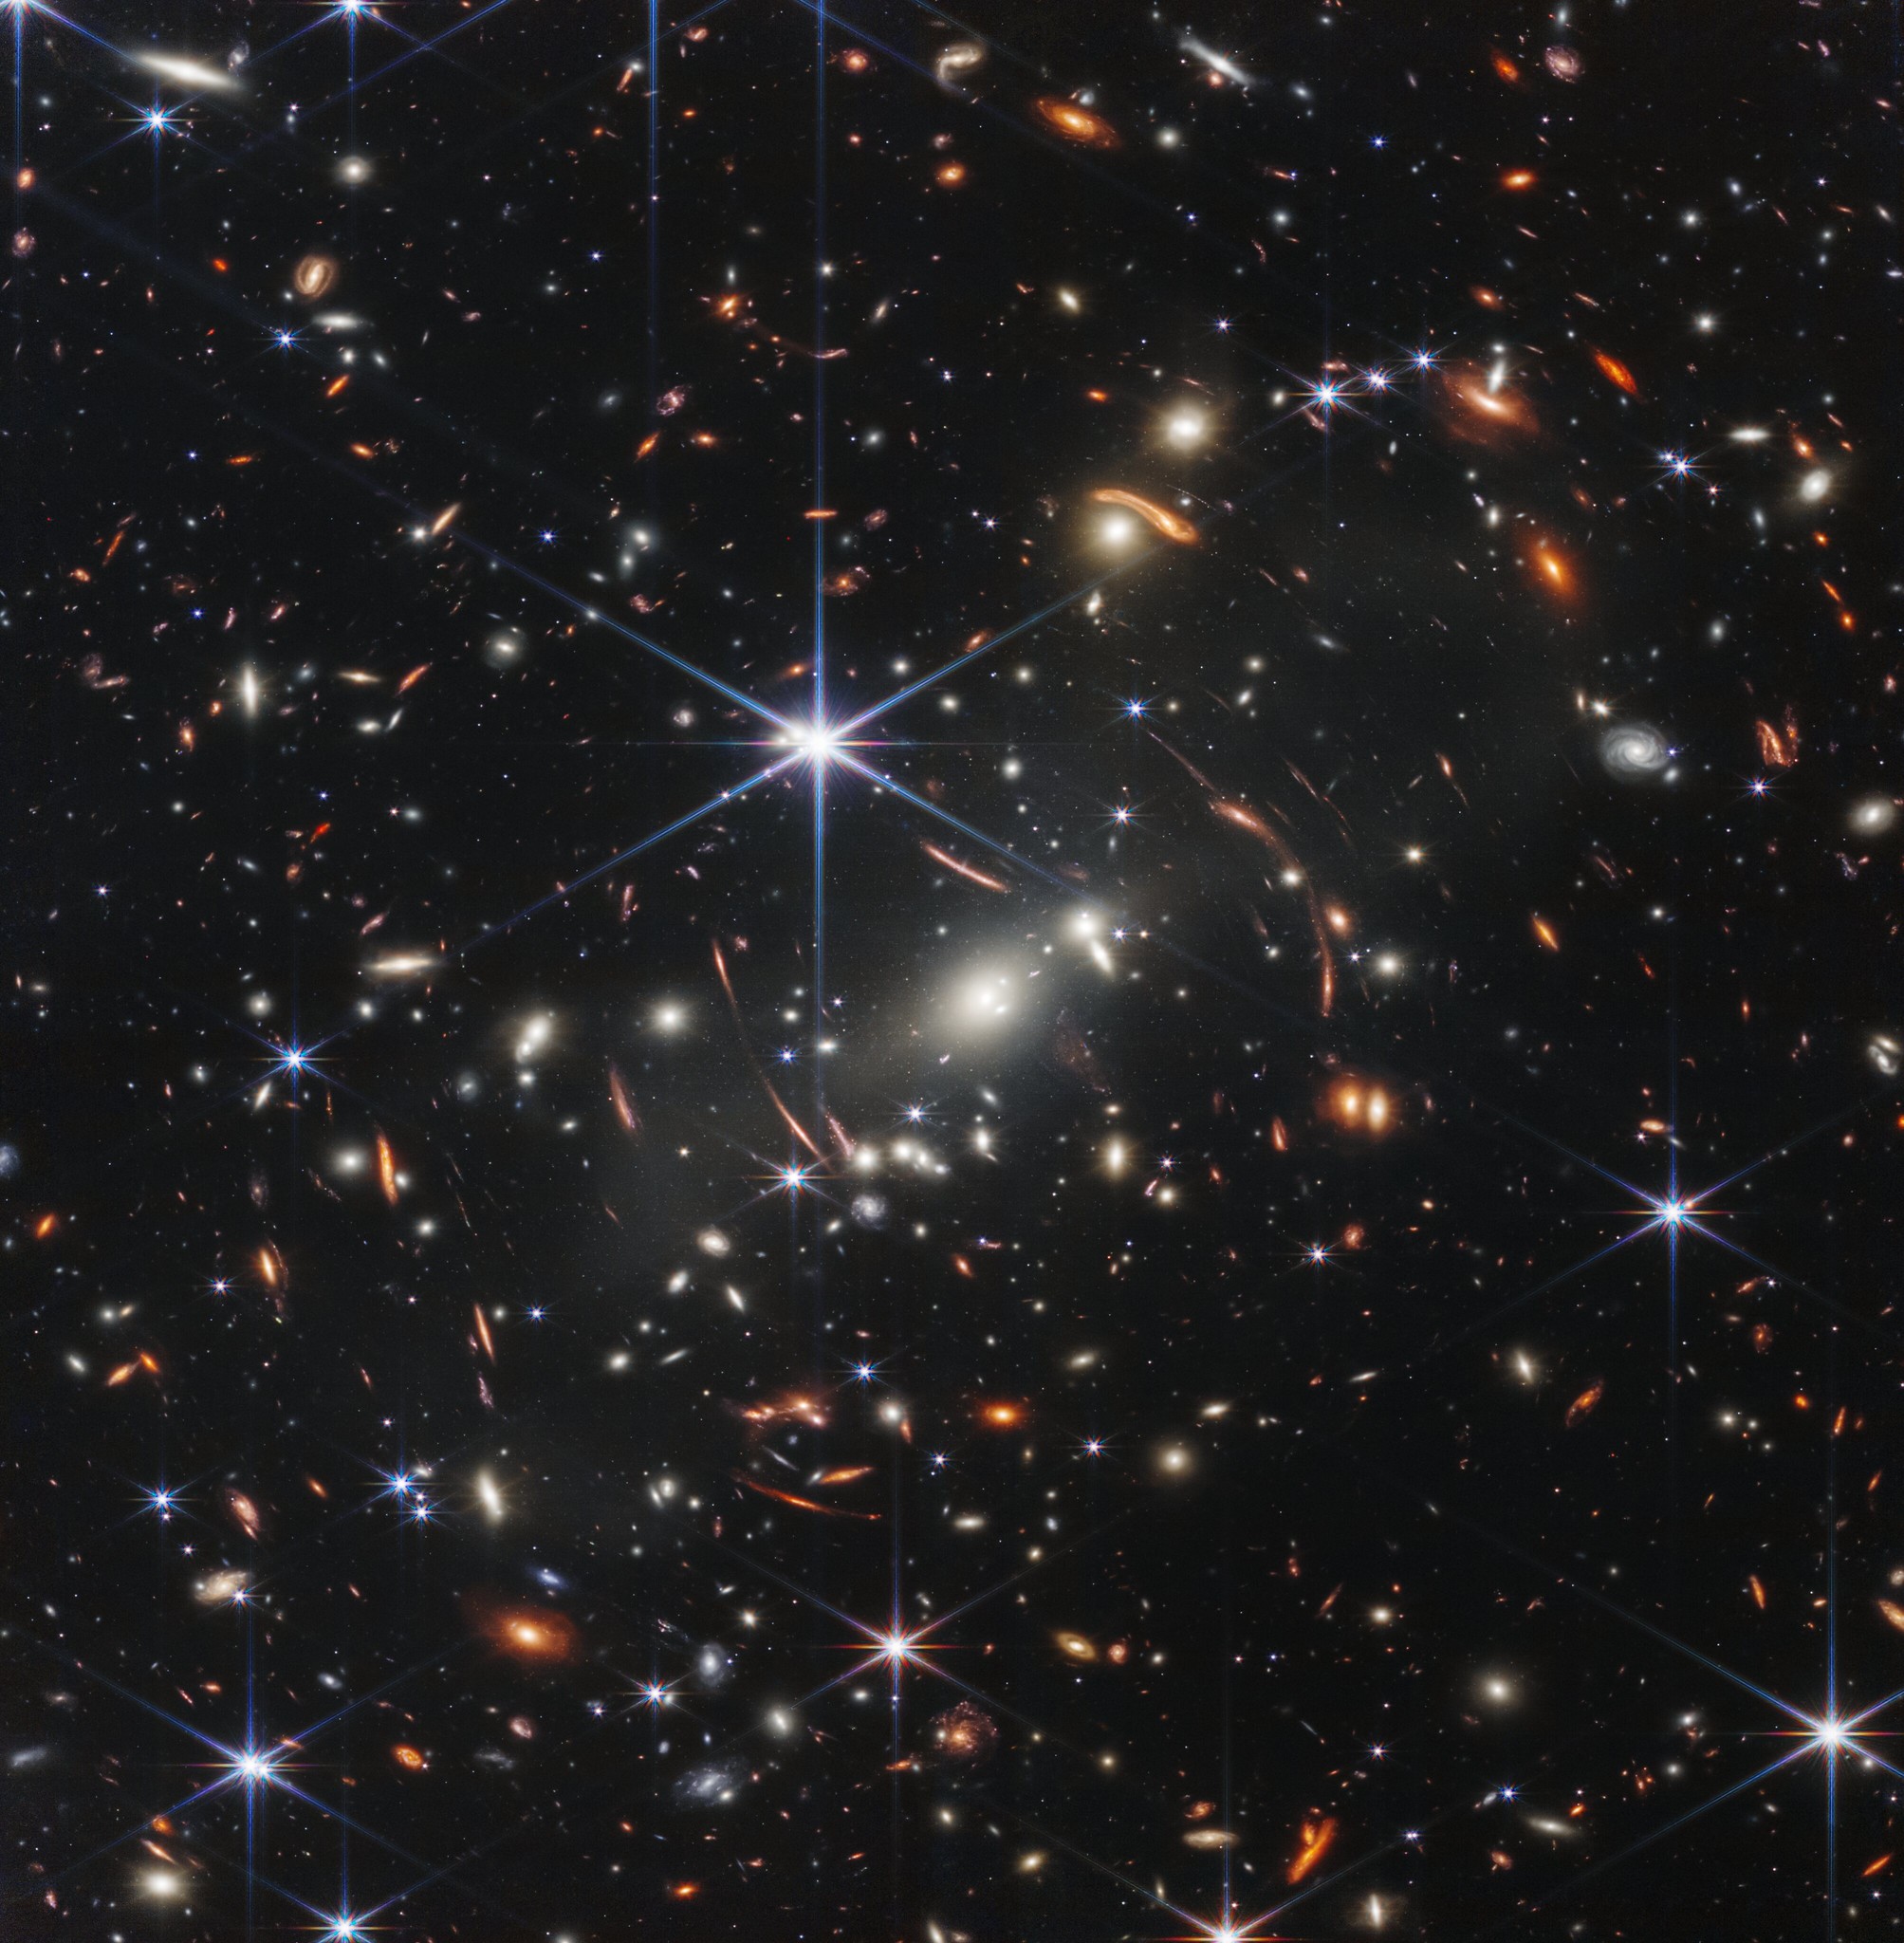 James Webb telescope image of space